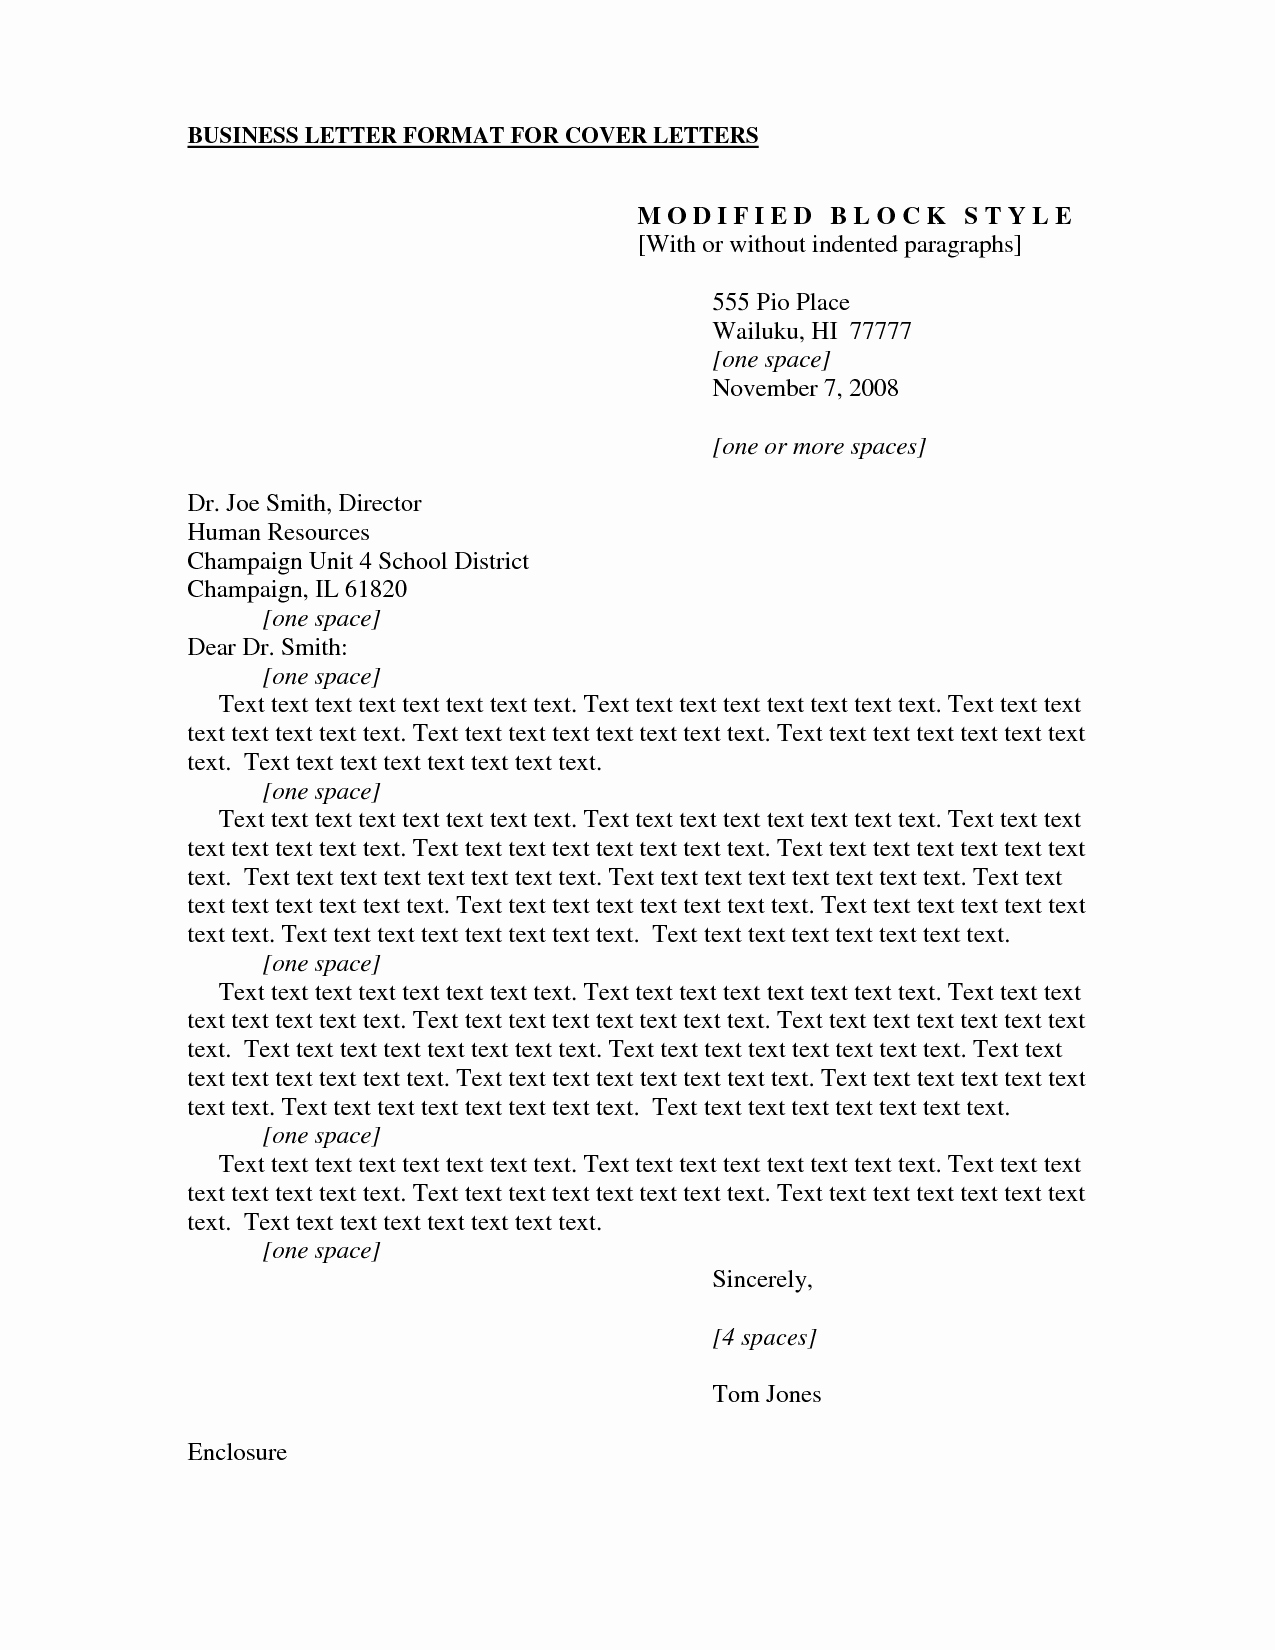 Formal Business Cover Letter format